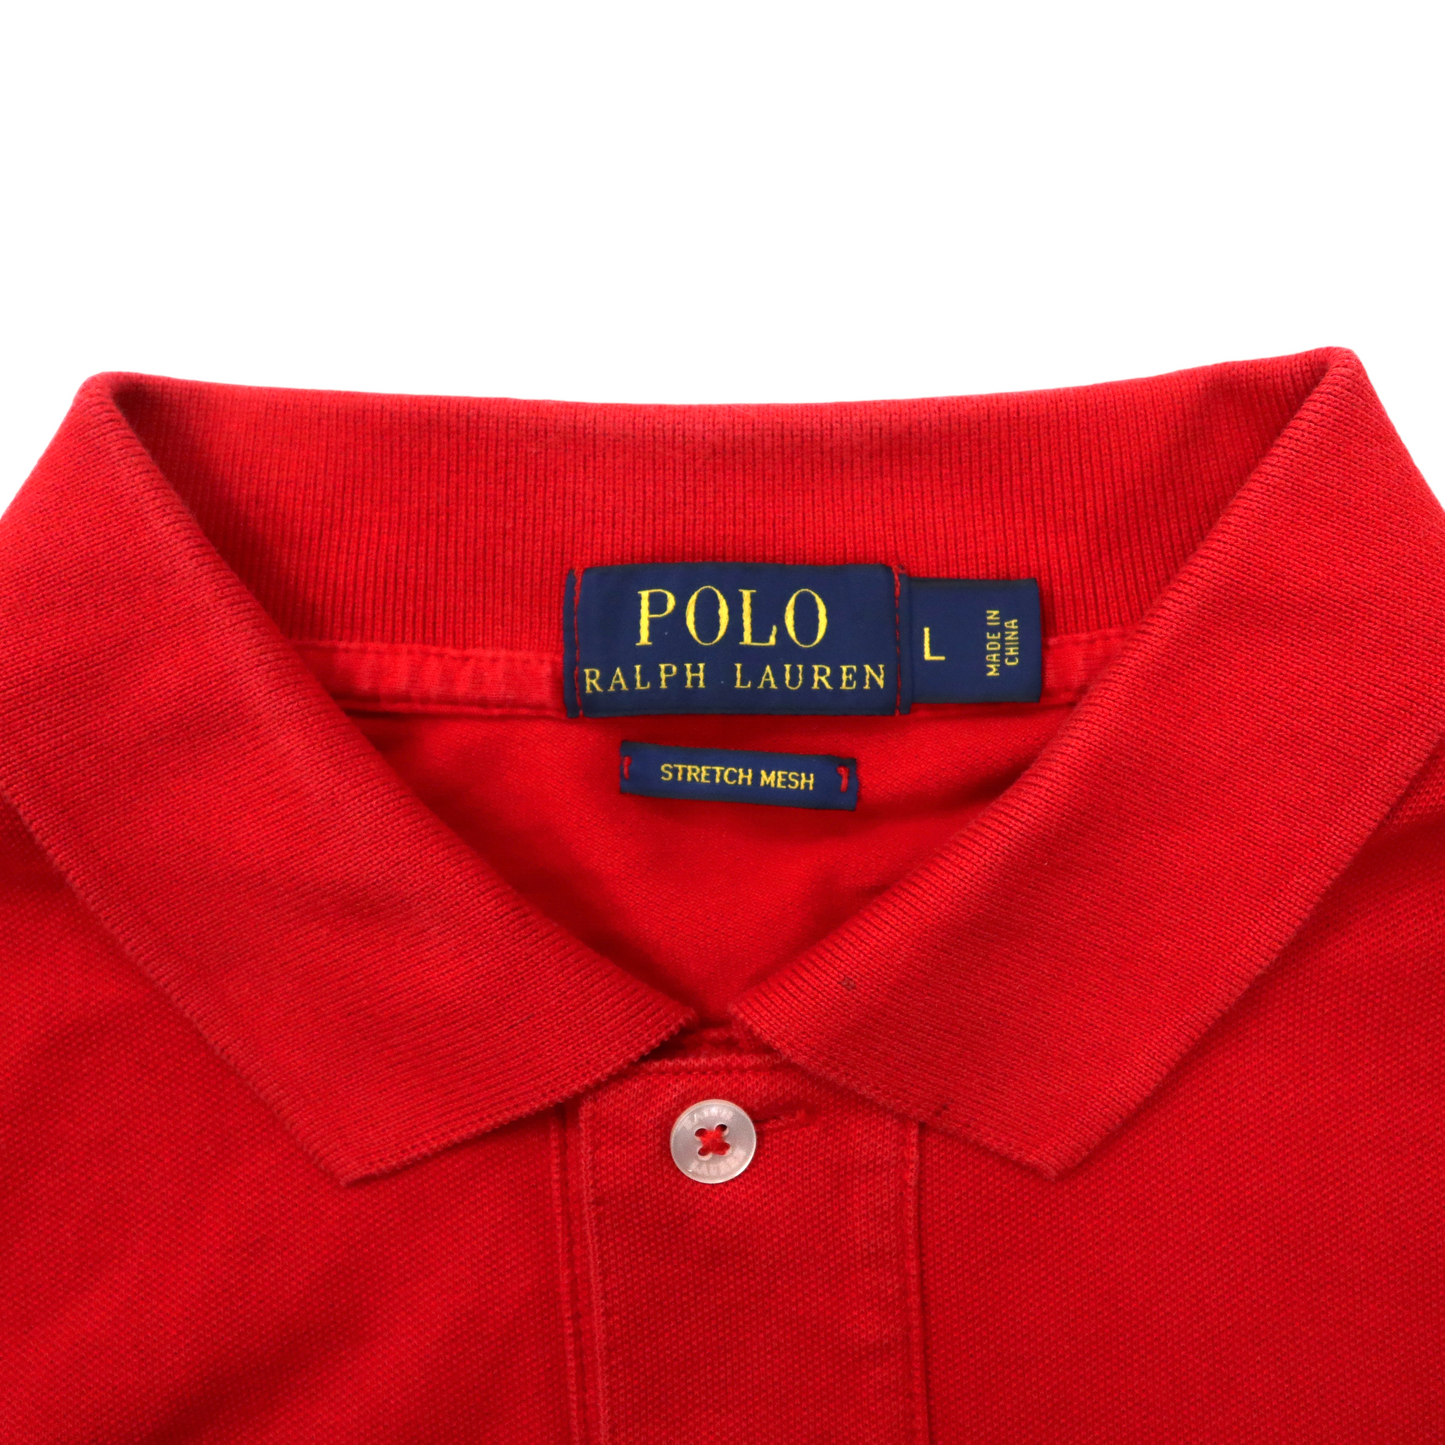 POLO RALPH LAUREN ポロシャツ L レッド コットン STRETCH MESH スモールポニー刺繍